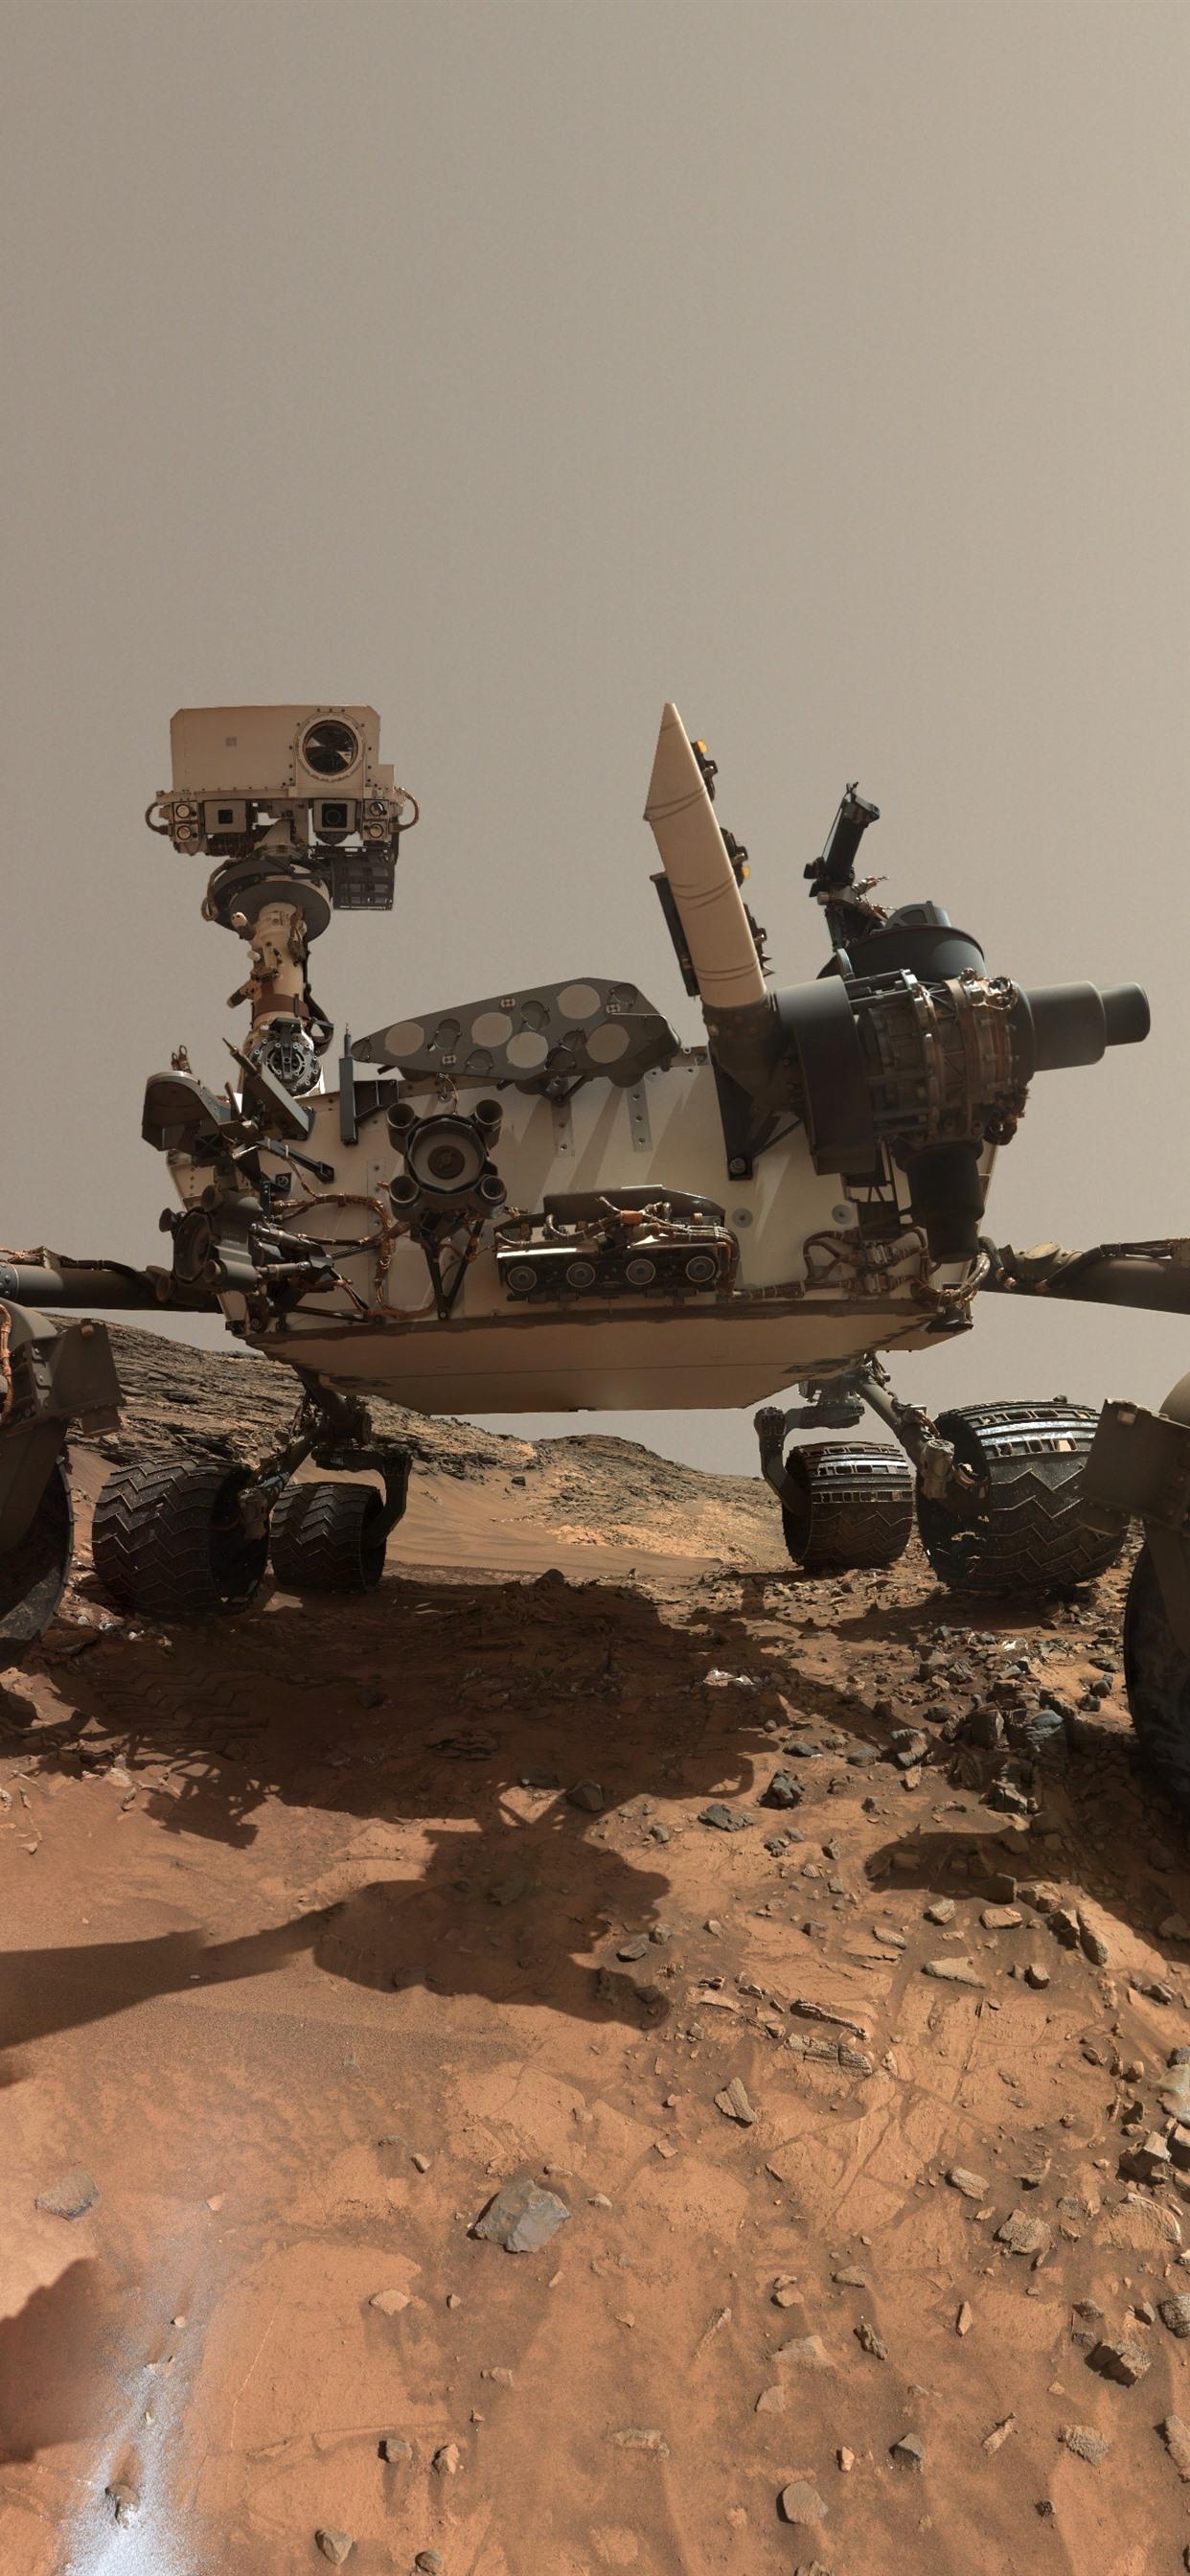 Mars Rover, Curiosity, planet 1242x2688 iPhone XS Max wallpaper